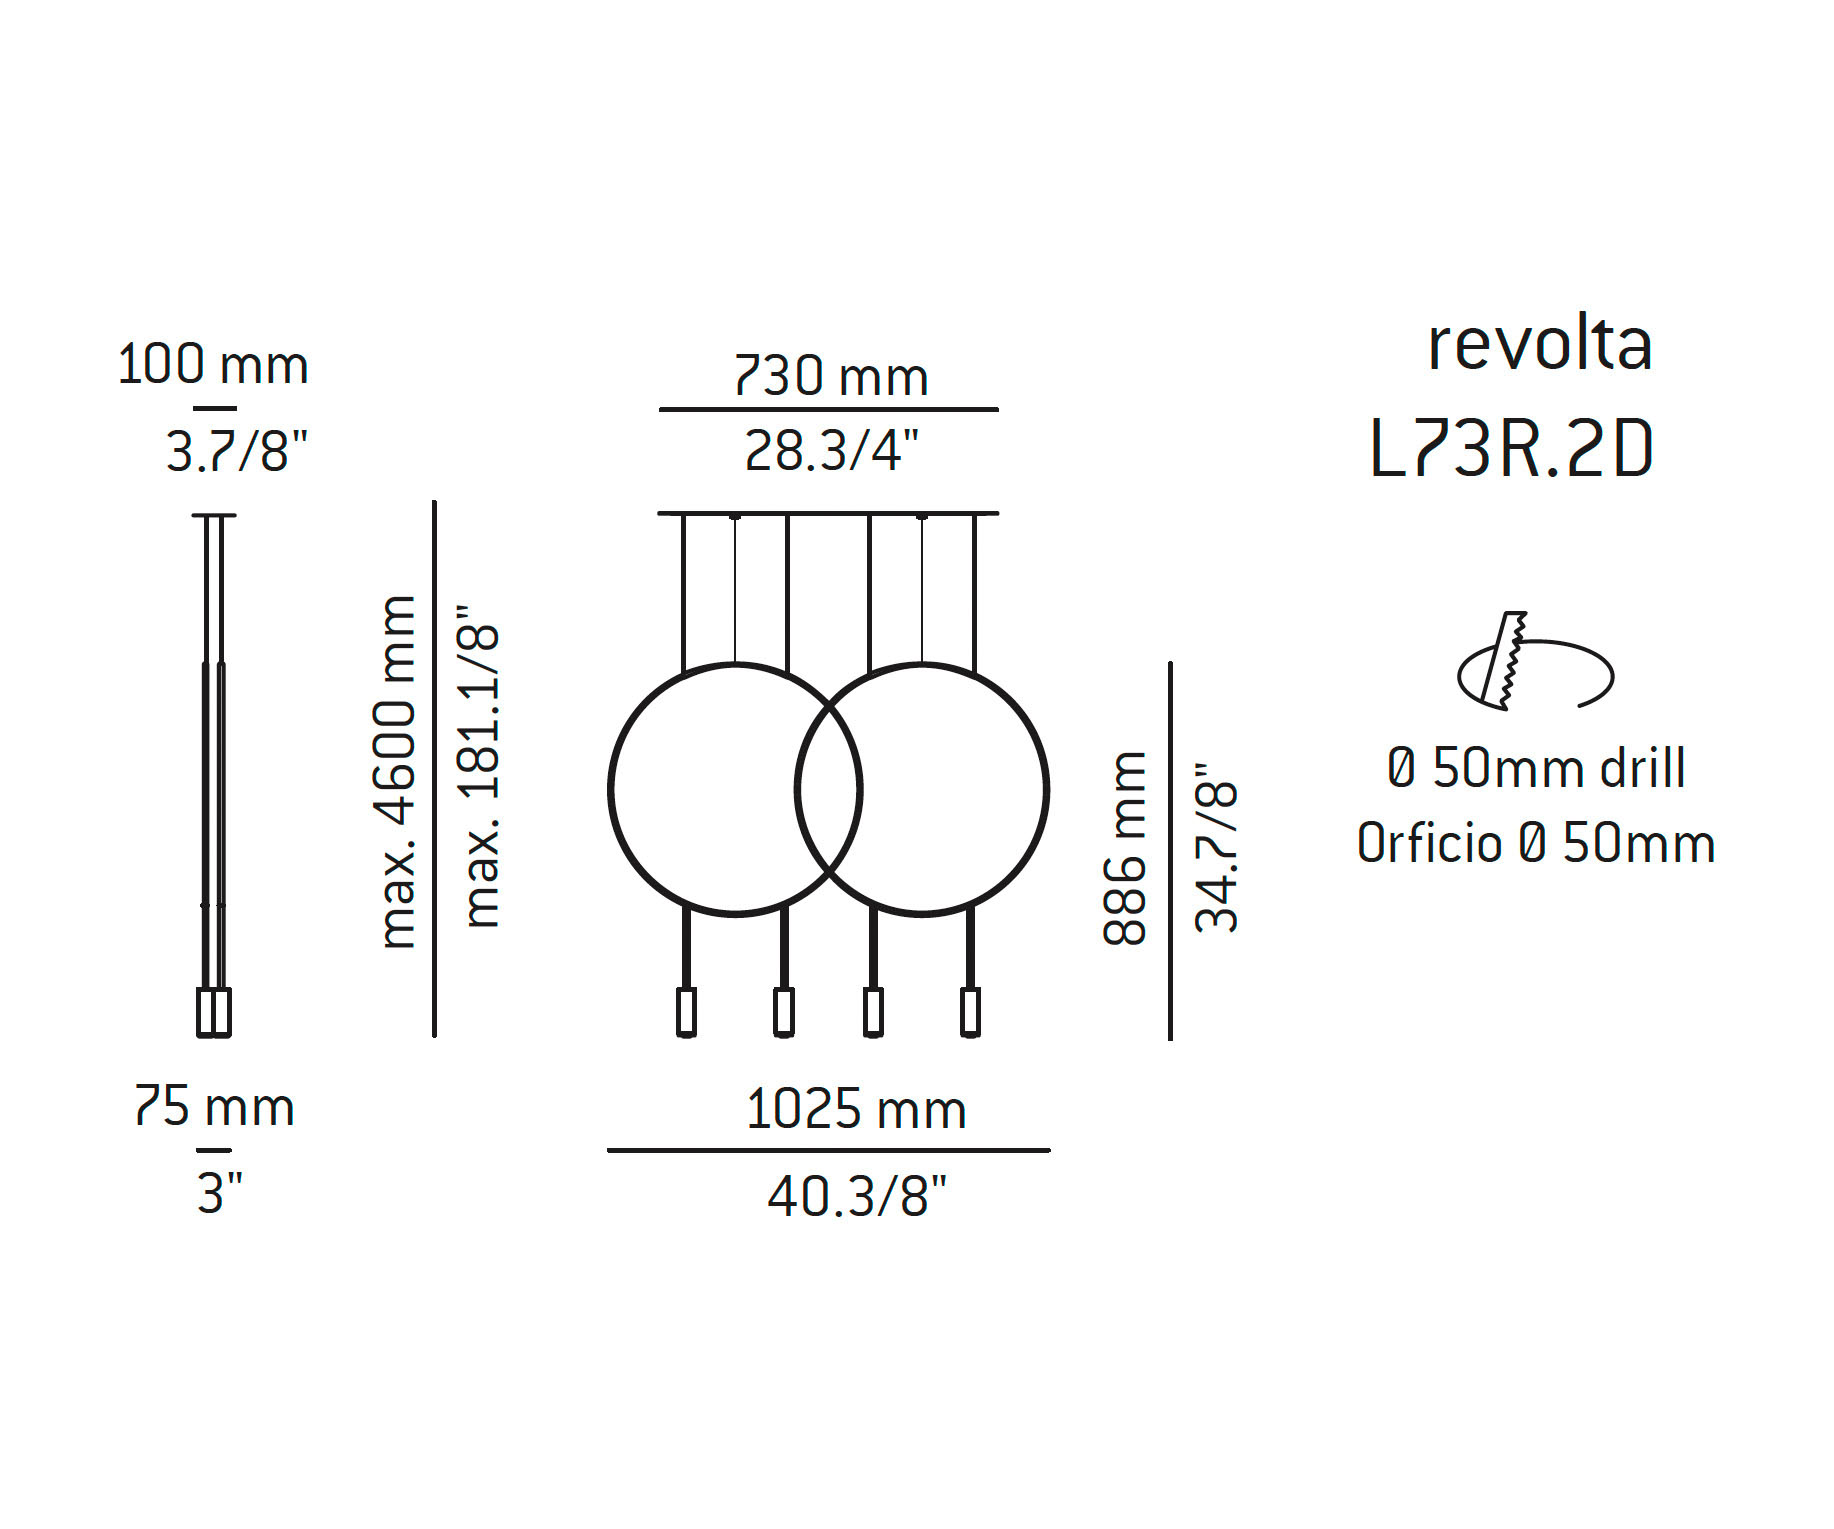 Medidas Revolta modelo L73R.2D de suspensión de Estiluz